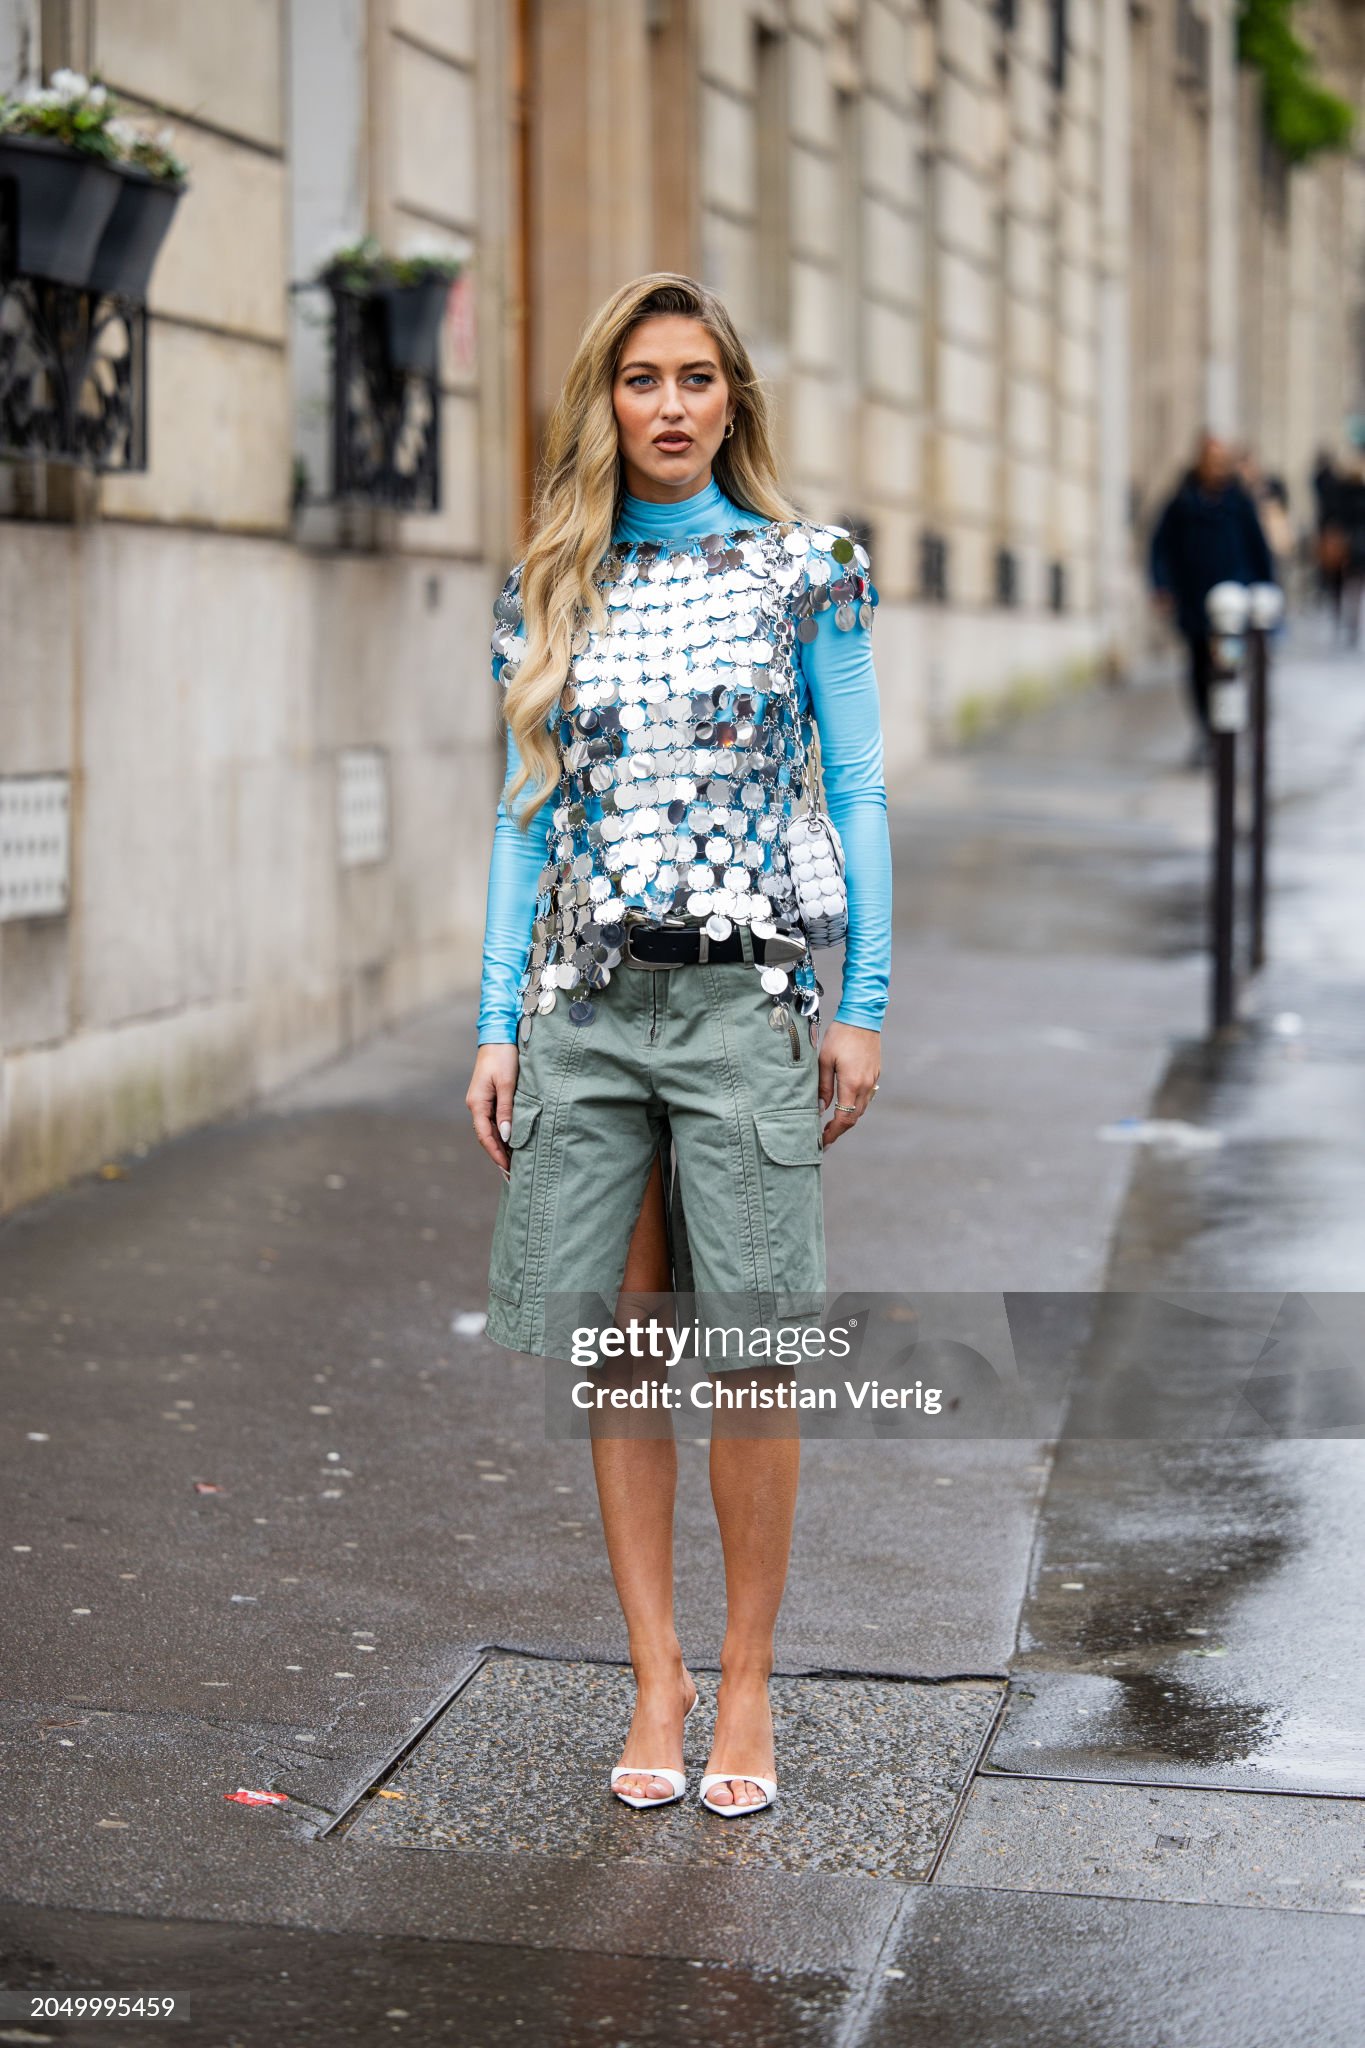 paris-france-emili-sindlev-wears-green-shorts-with-side-pockets-silver-top-blue-long-shirt.jpg